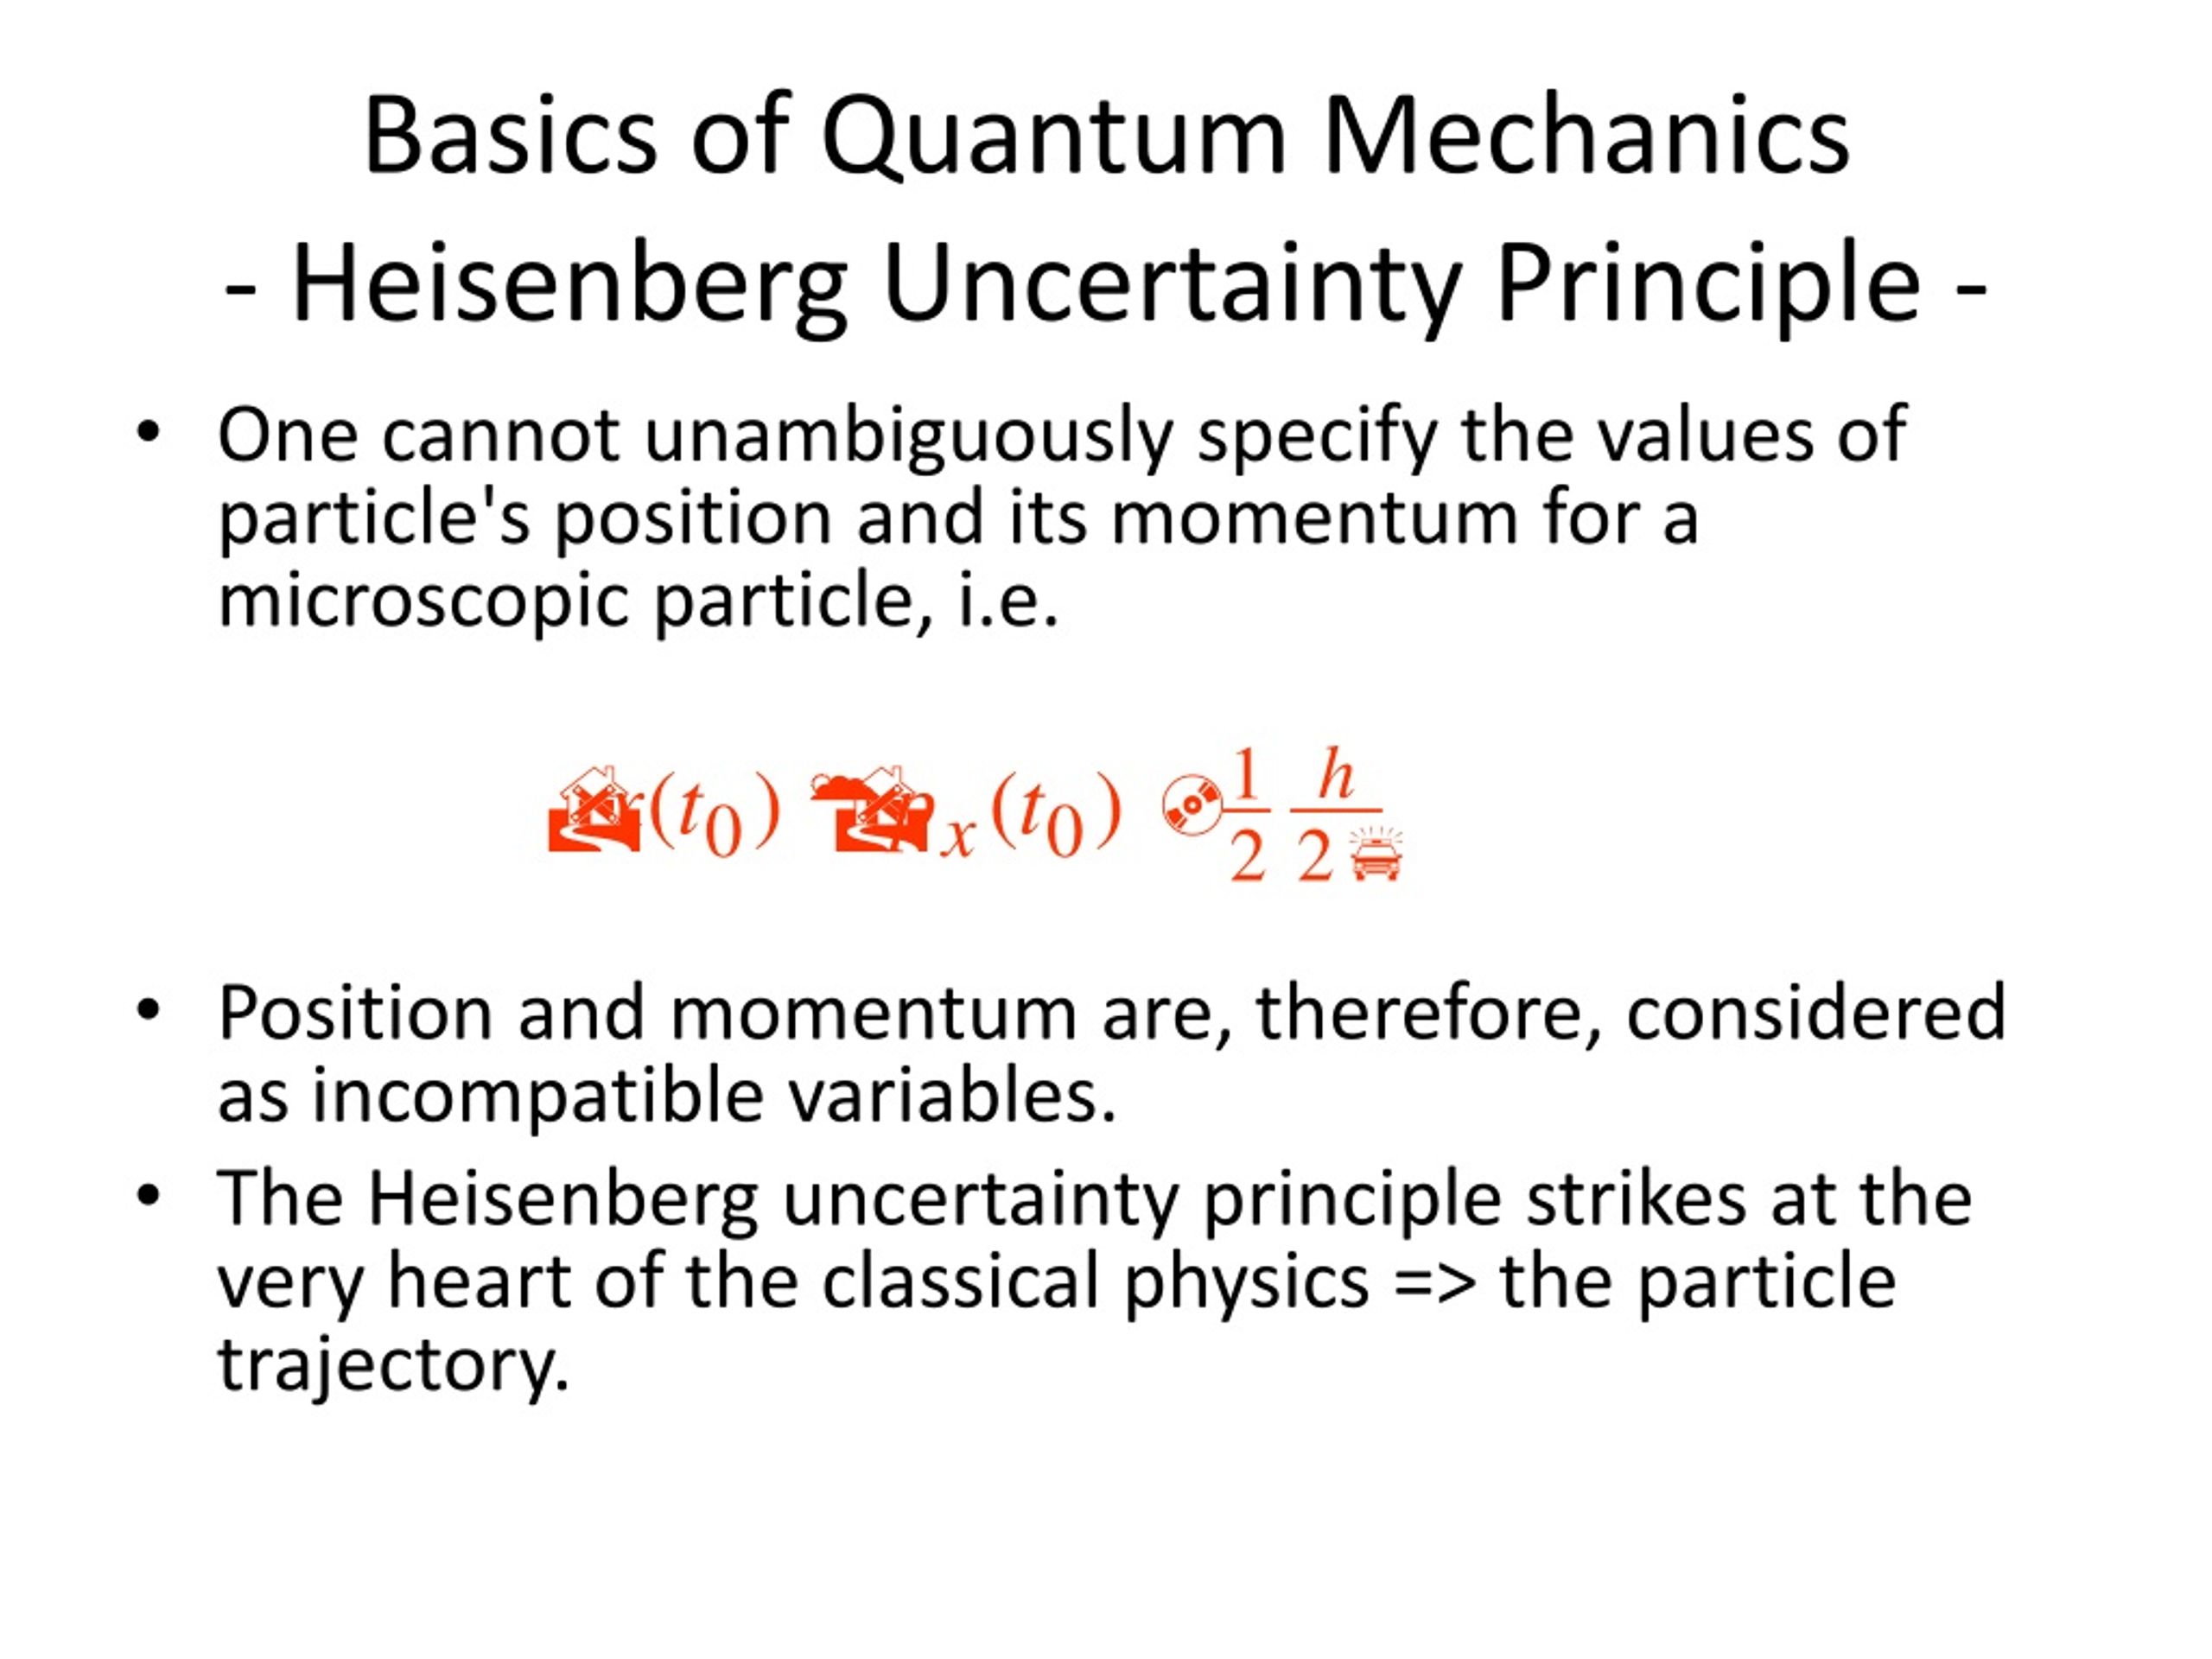 uncertainty principle quantum mechanics